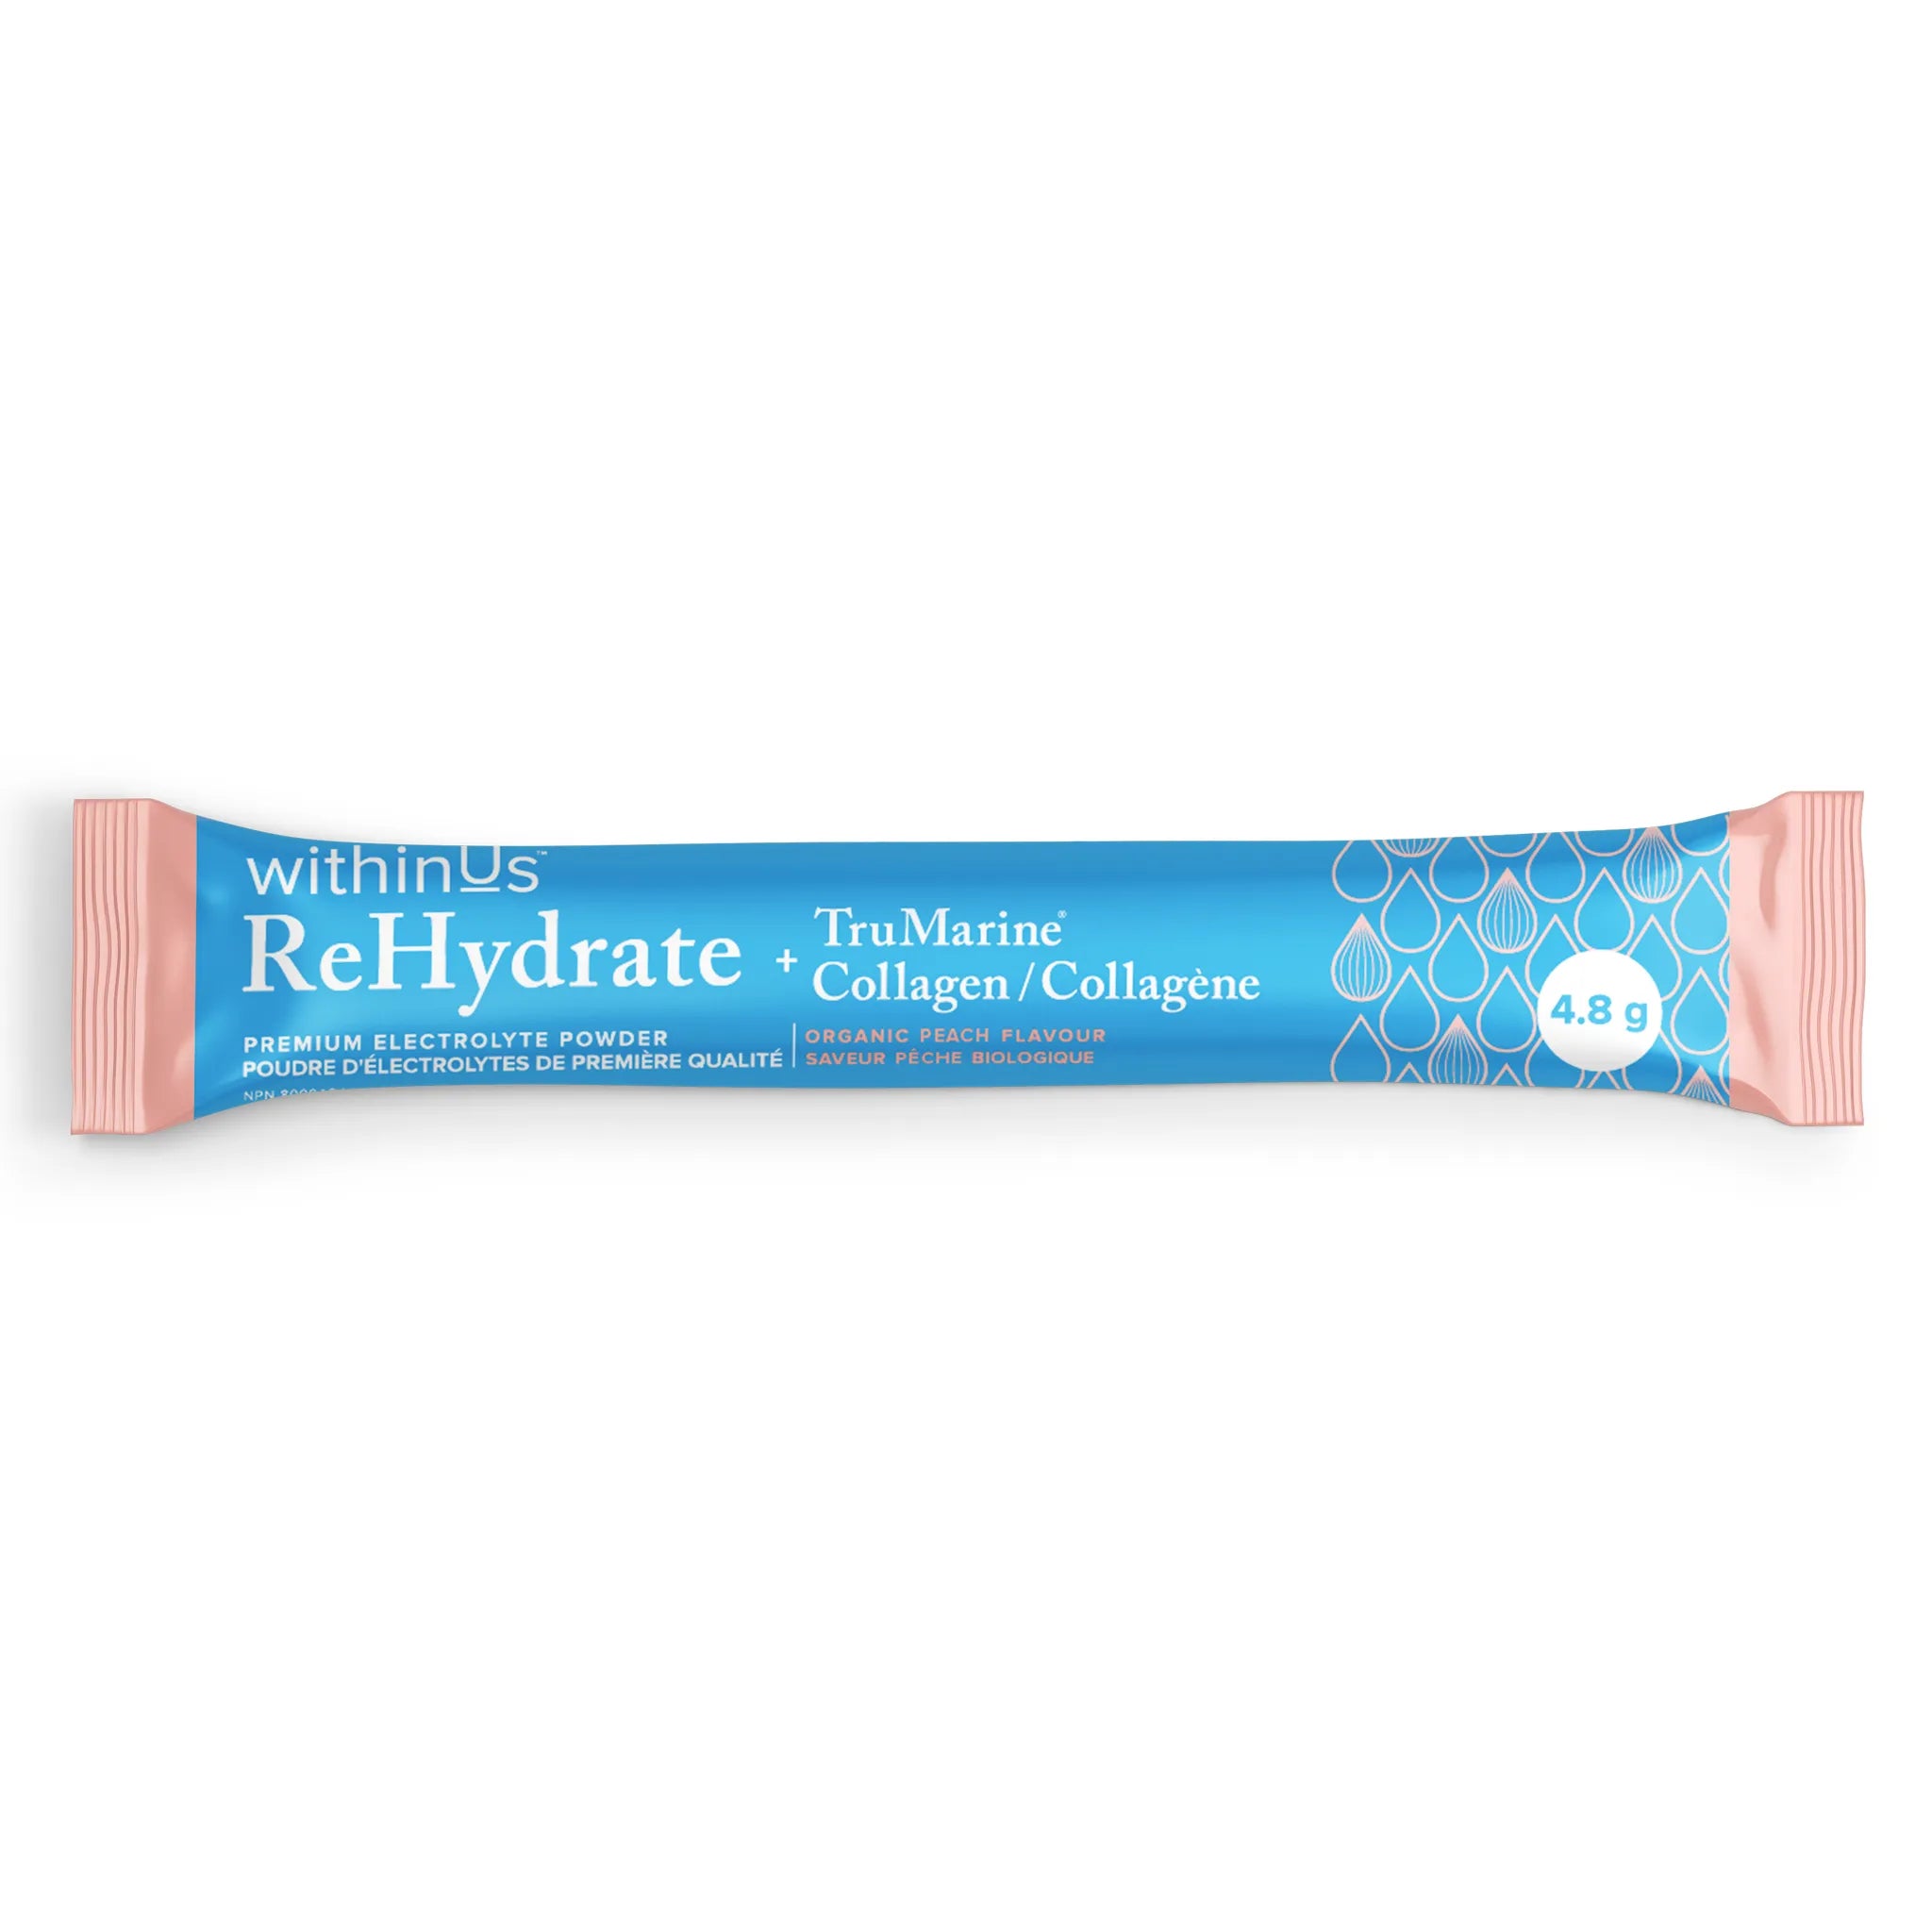 ReHydrate + TruMarine® Collagen Box PEACH - 20 Stick Packs